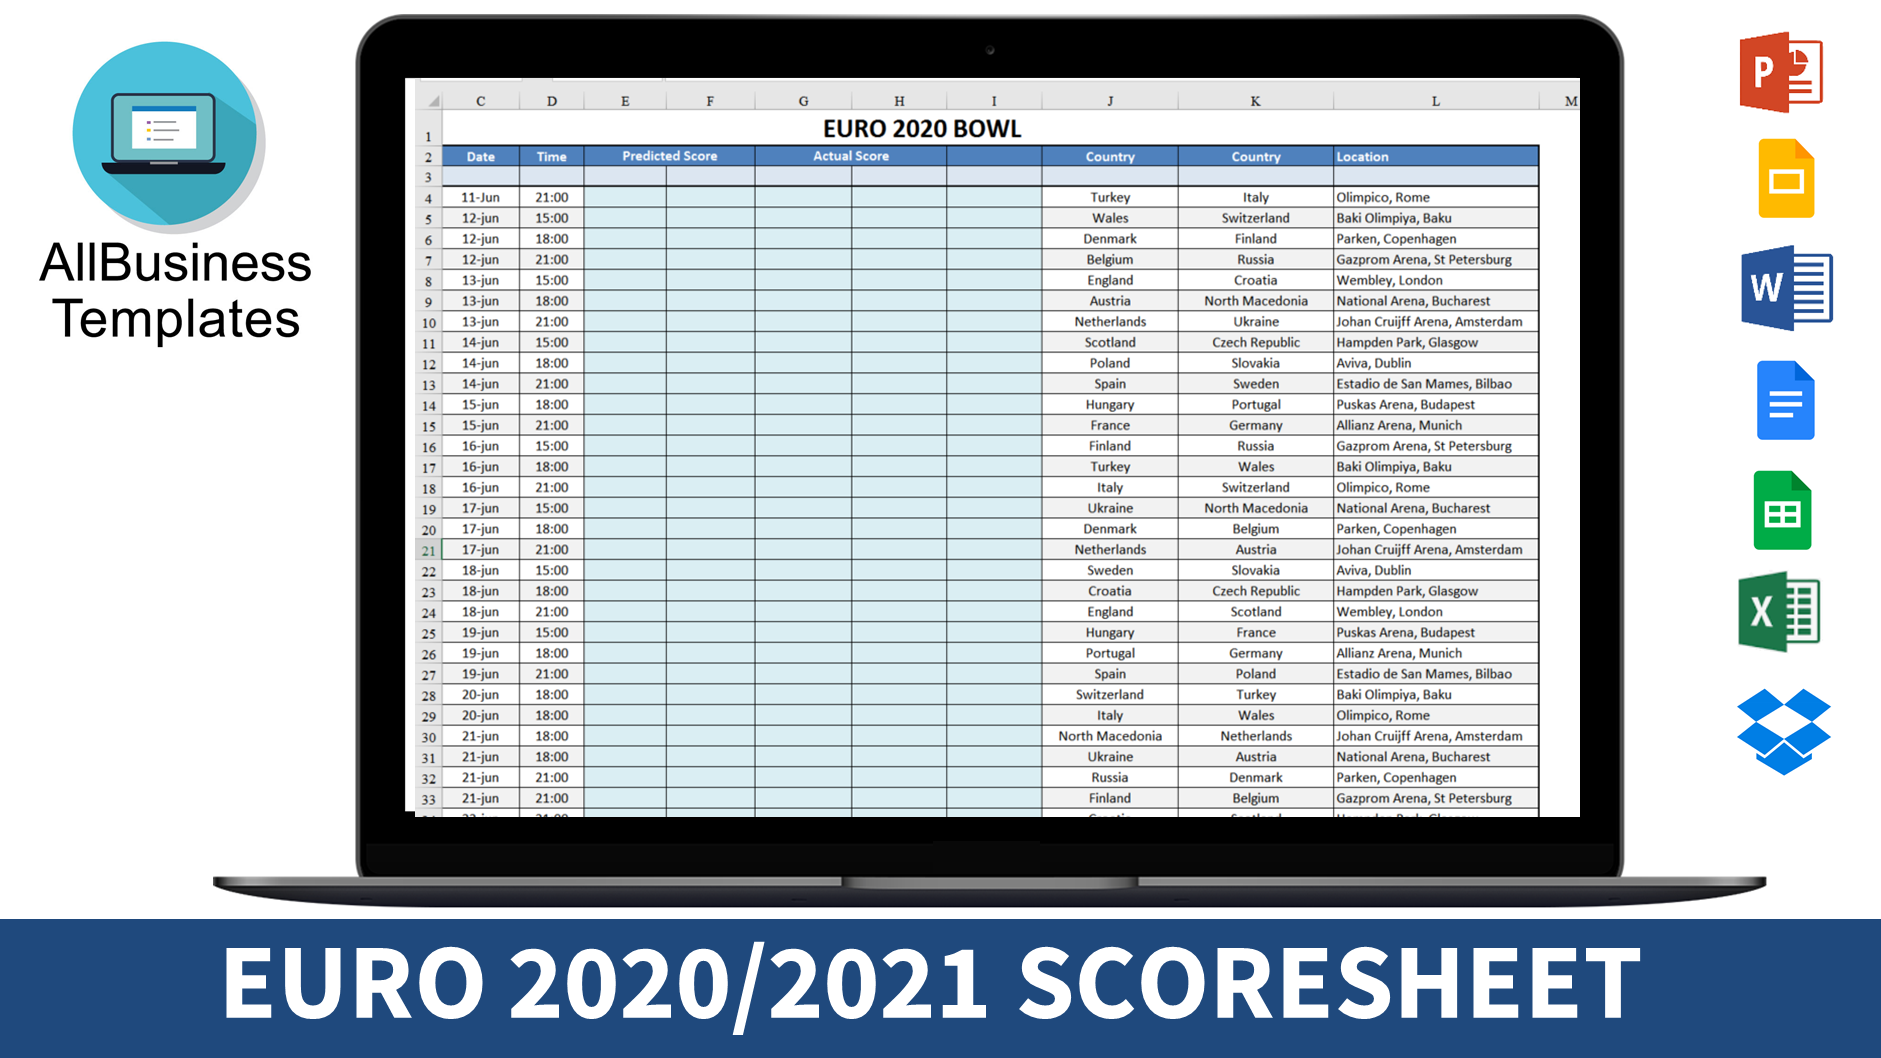 EURO 2020 Tournament Scoresheet main image